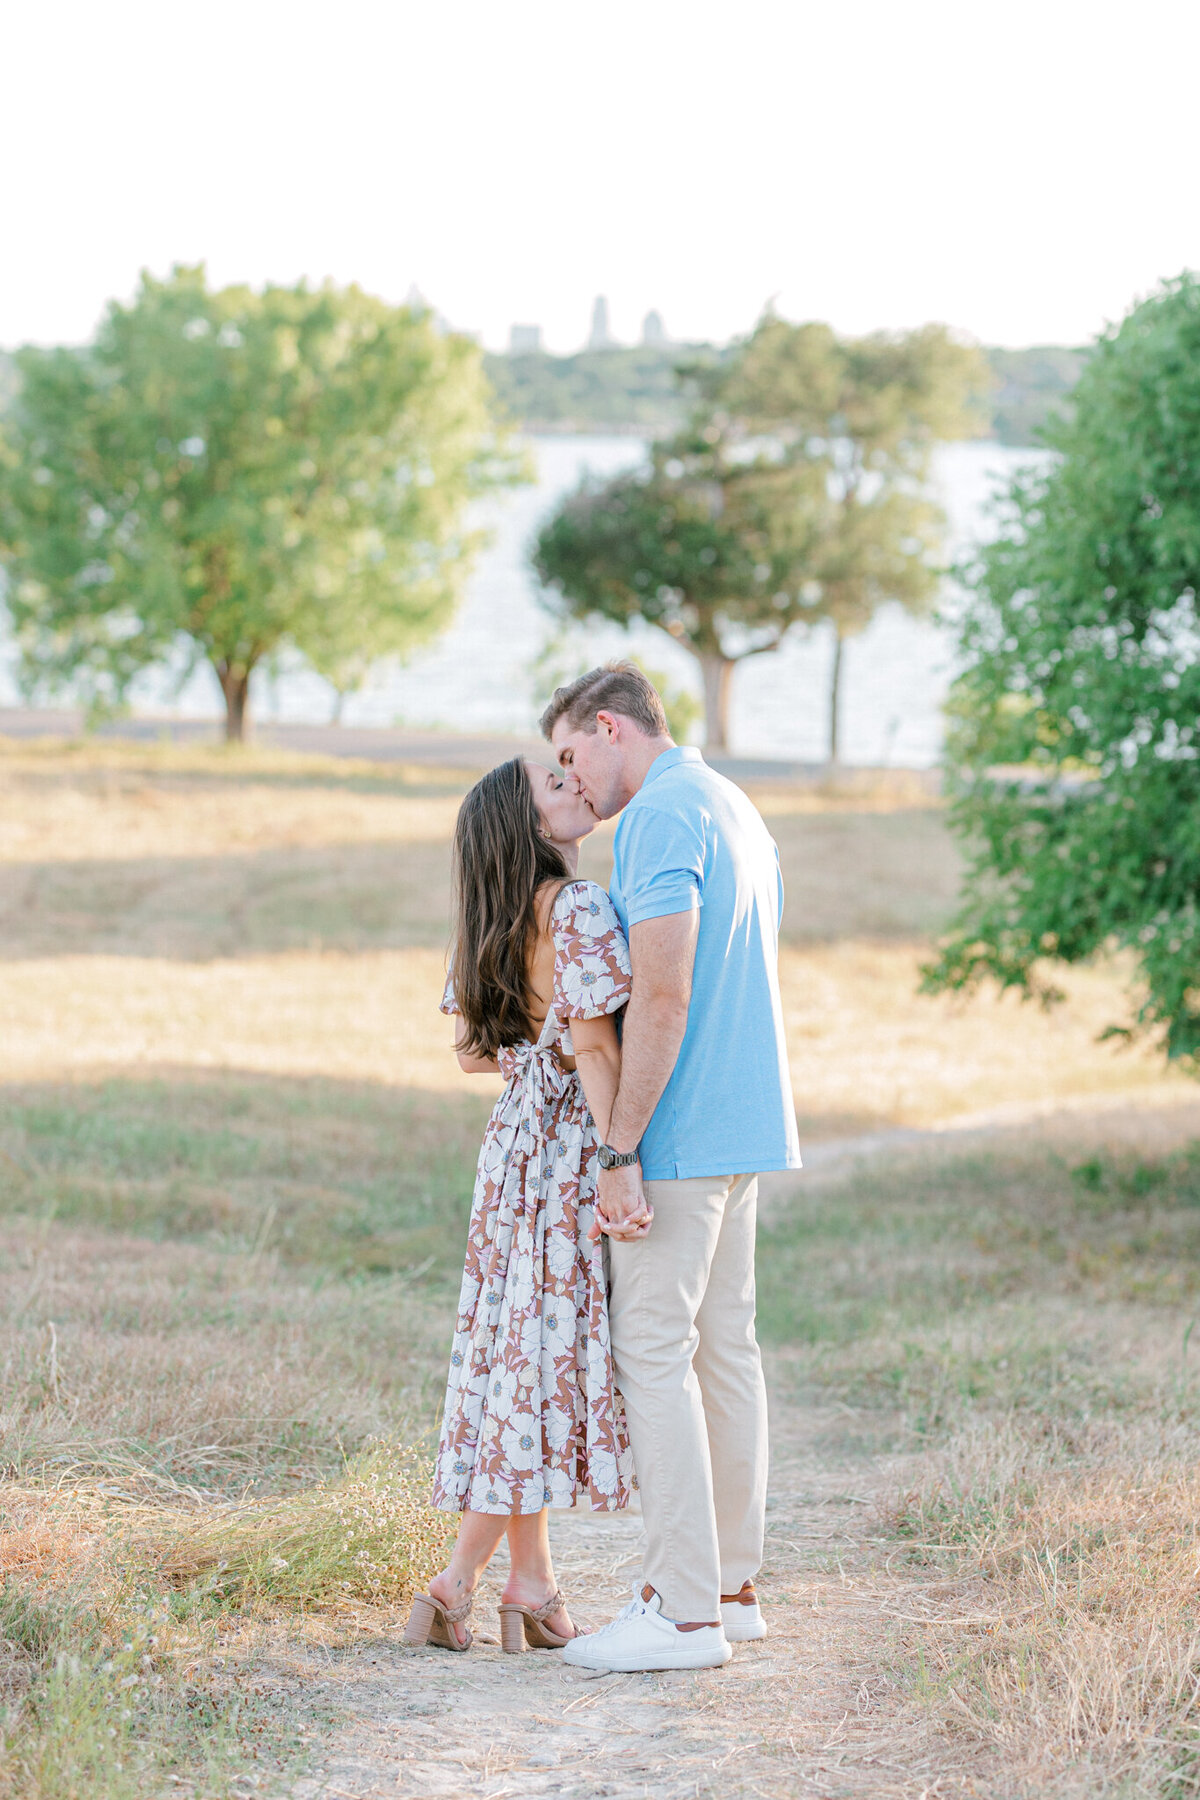 Allie & Nolan's Engagement Session at White Rock Lake | Dallas Wedding Photographer | Sami Kathryn Photography-1